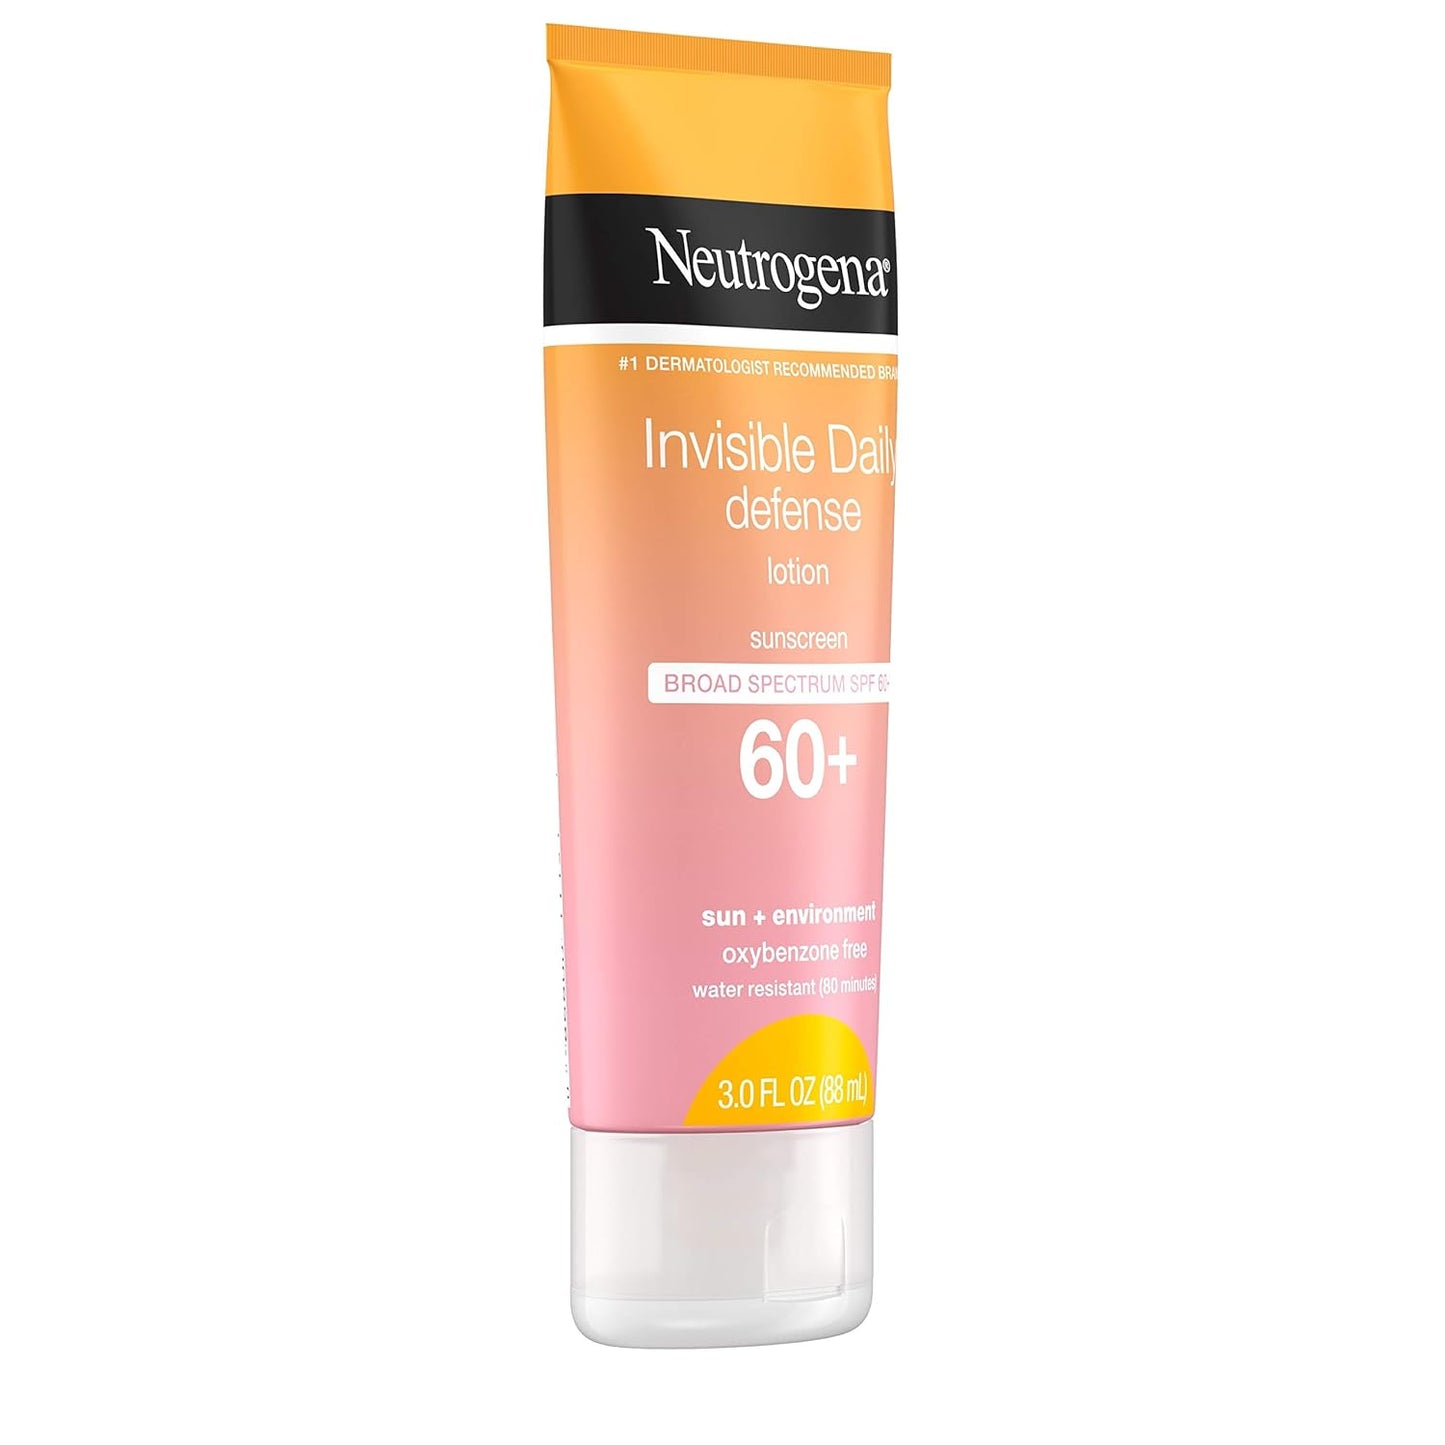 Neutrogena Invisible Daily Defense Sunscreen Lotion, Broad Spectrum SPF 60+